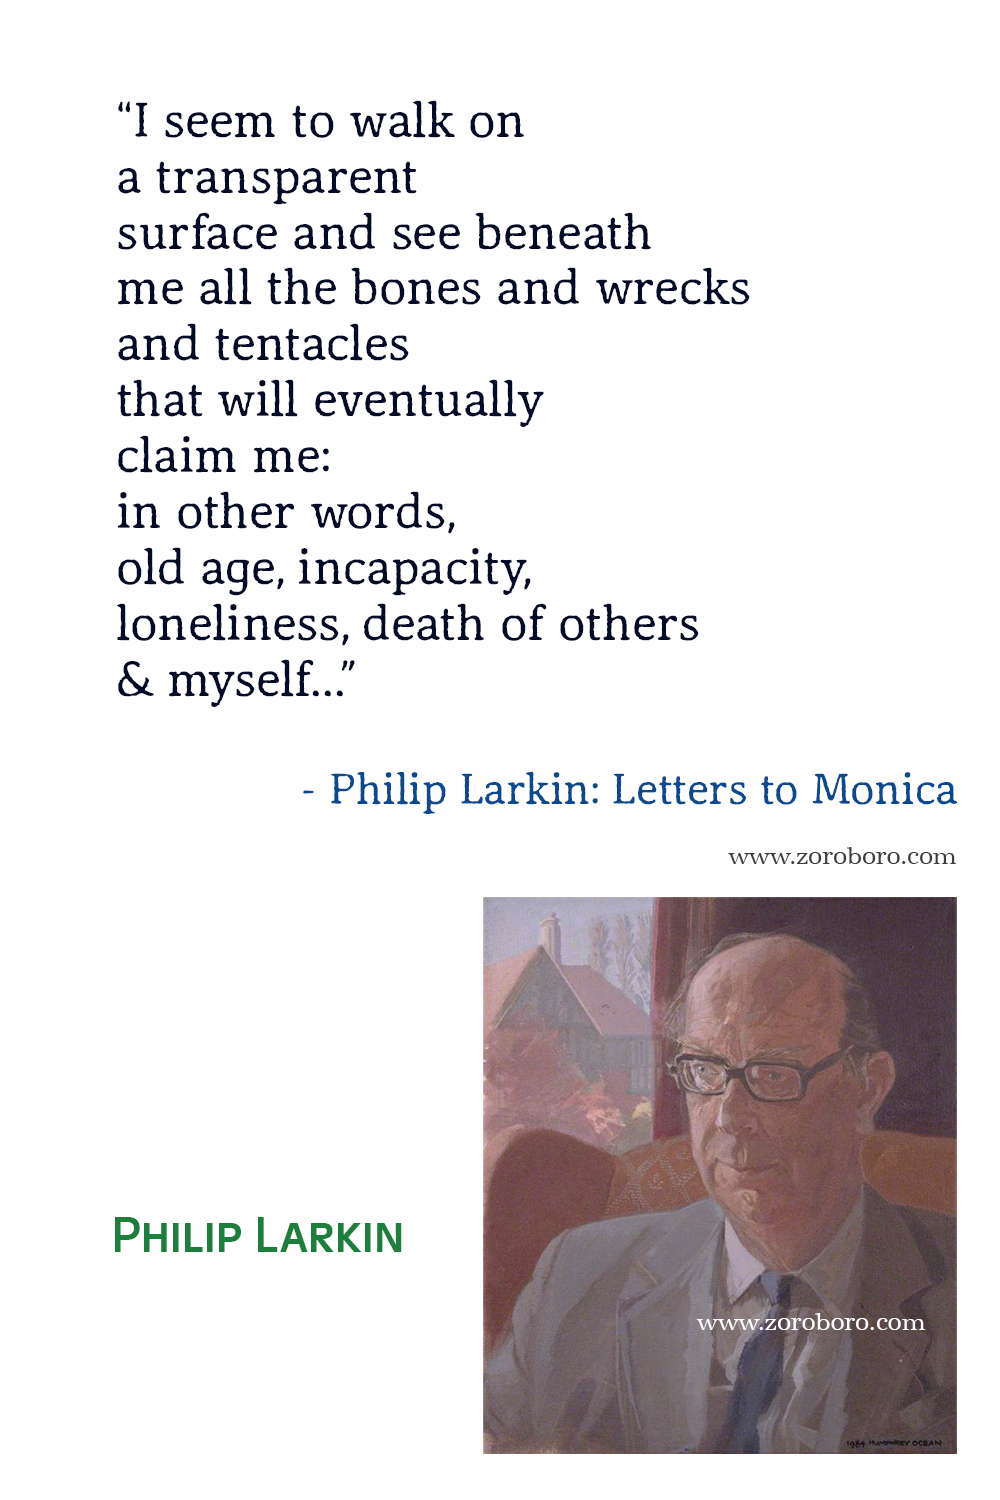 Philip Larkin Quotes, Philip Larkin Poet, Philip Larkin Poetry, Philip Larkin Poems, Philip Larkin Books Quotes, Philip Larkin: Selected Poems